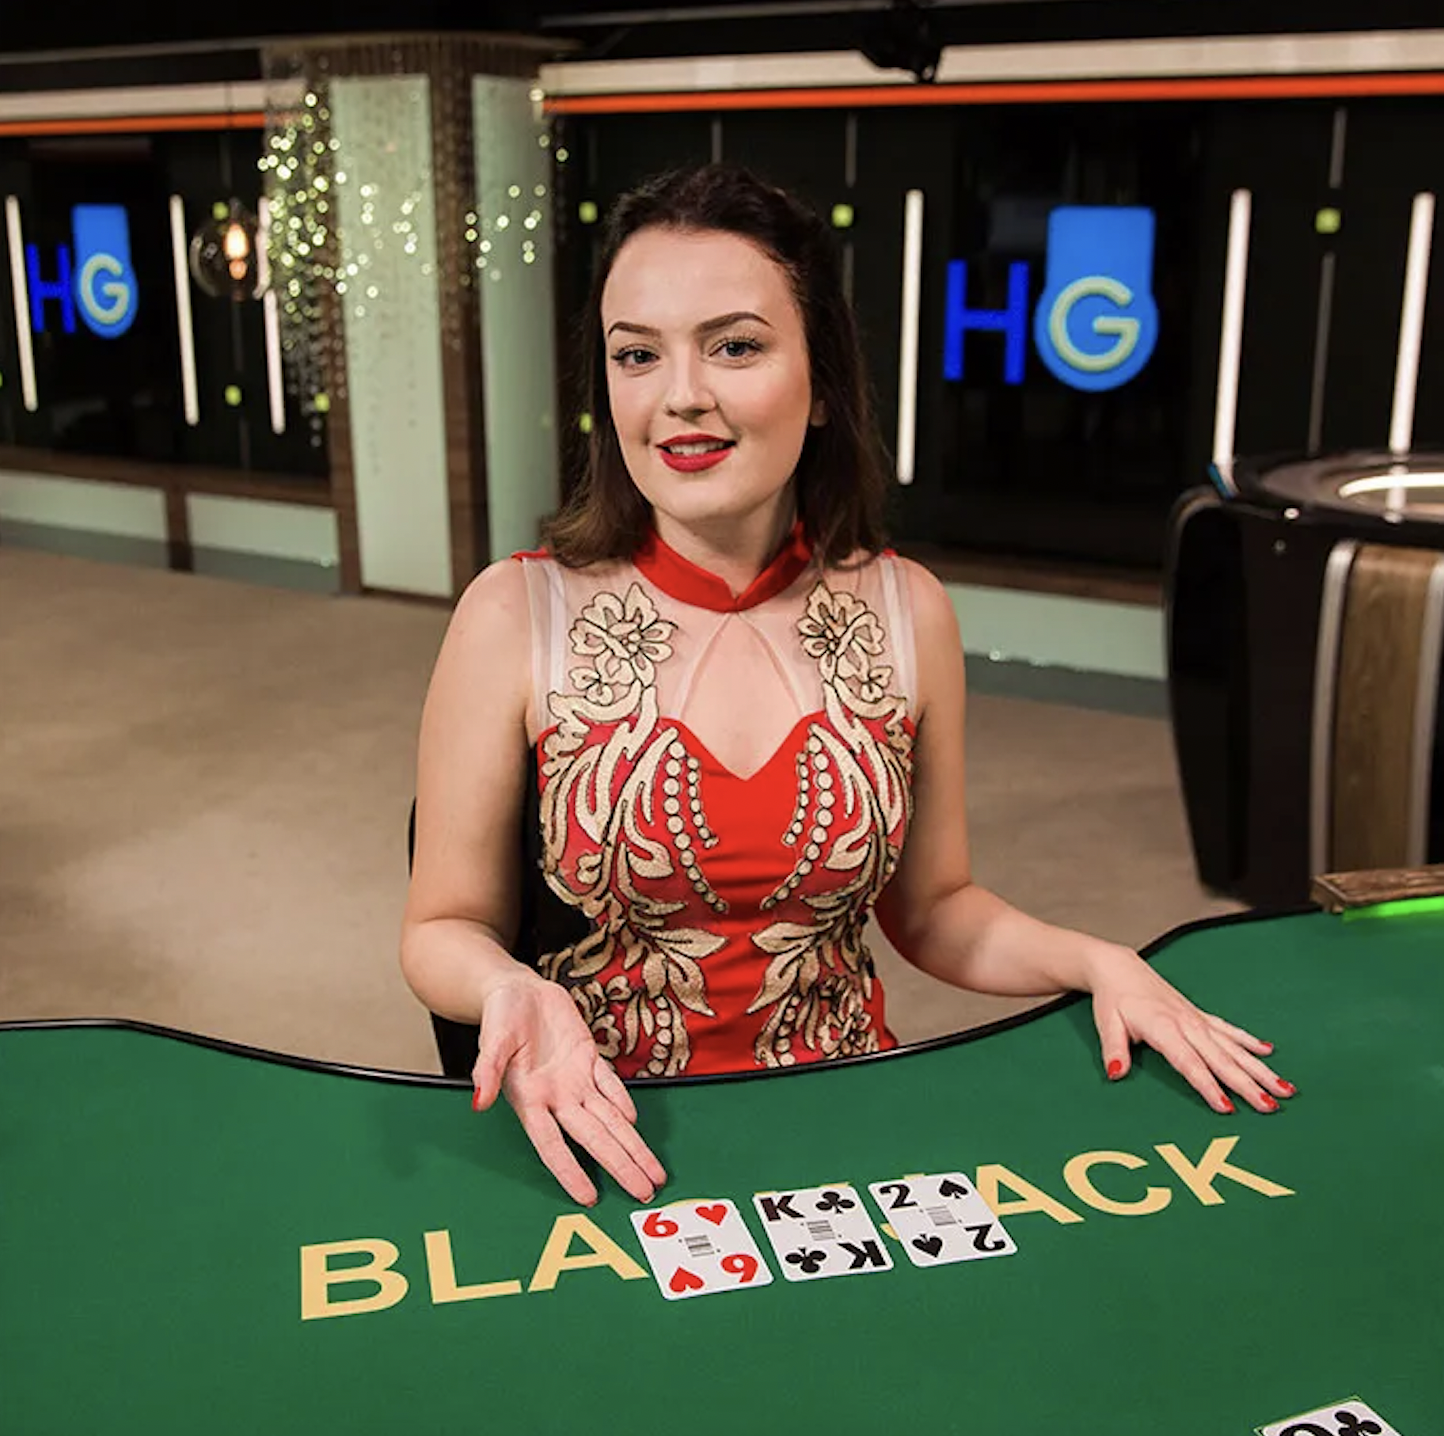 Blackjack is a Live Casino Game Provided by the Vendor Partner HOGaming GamingSoft